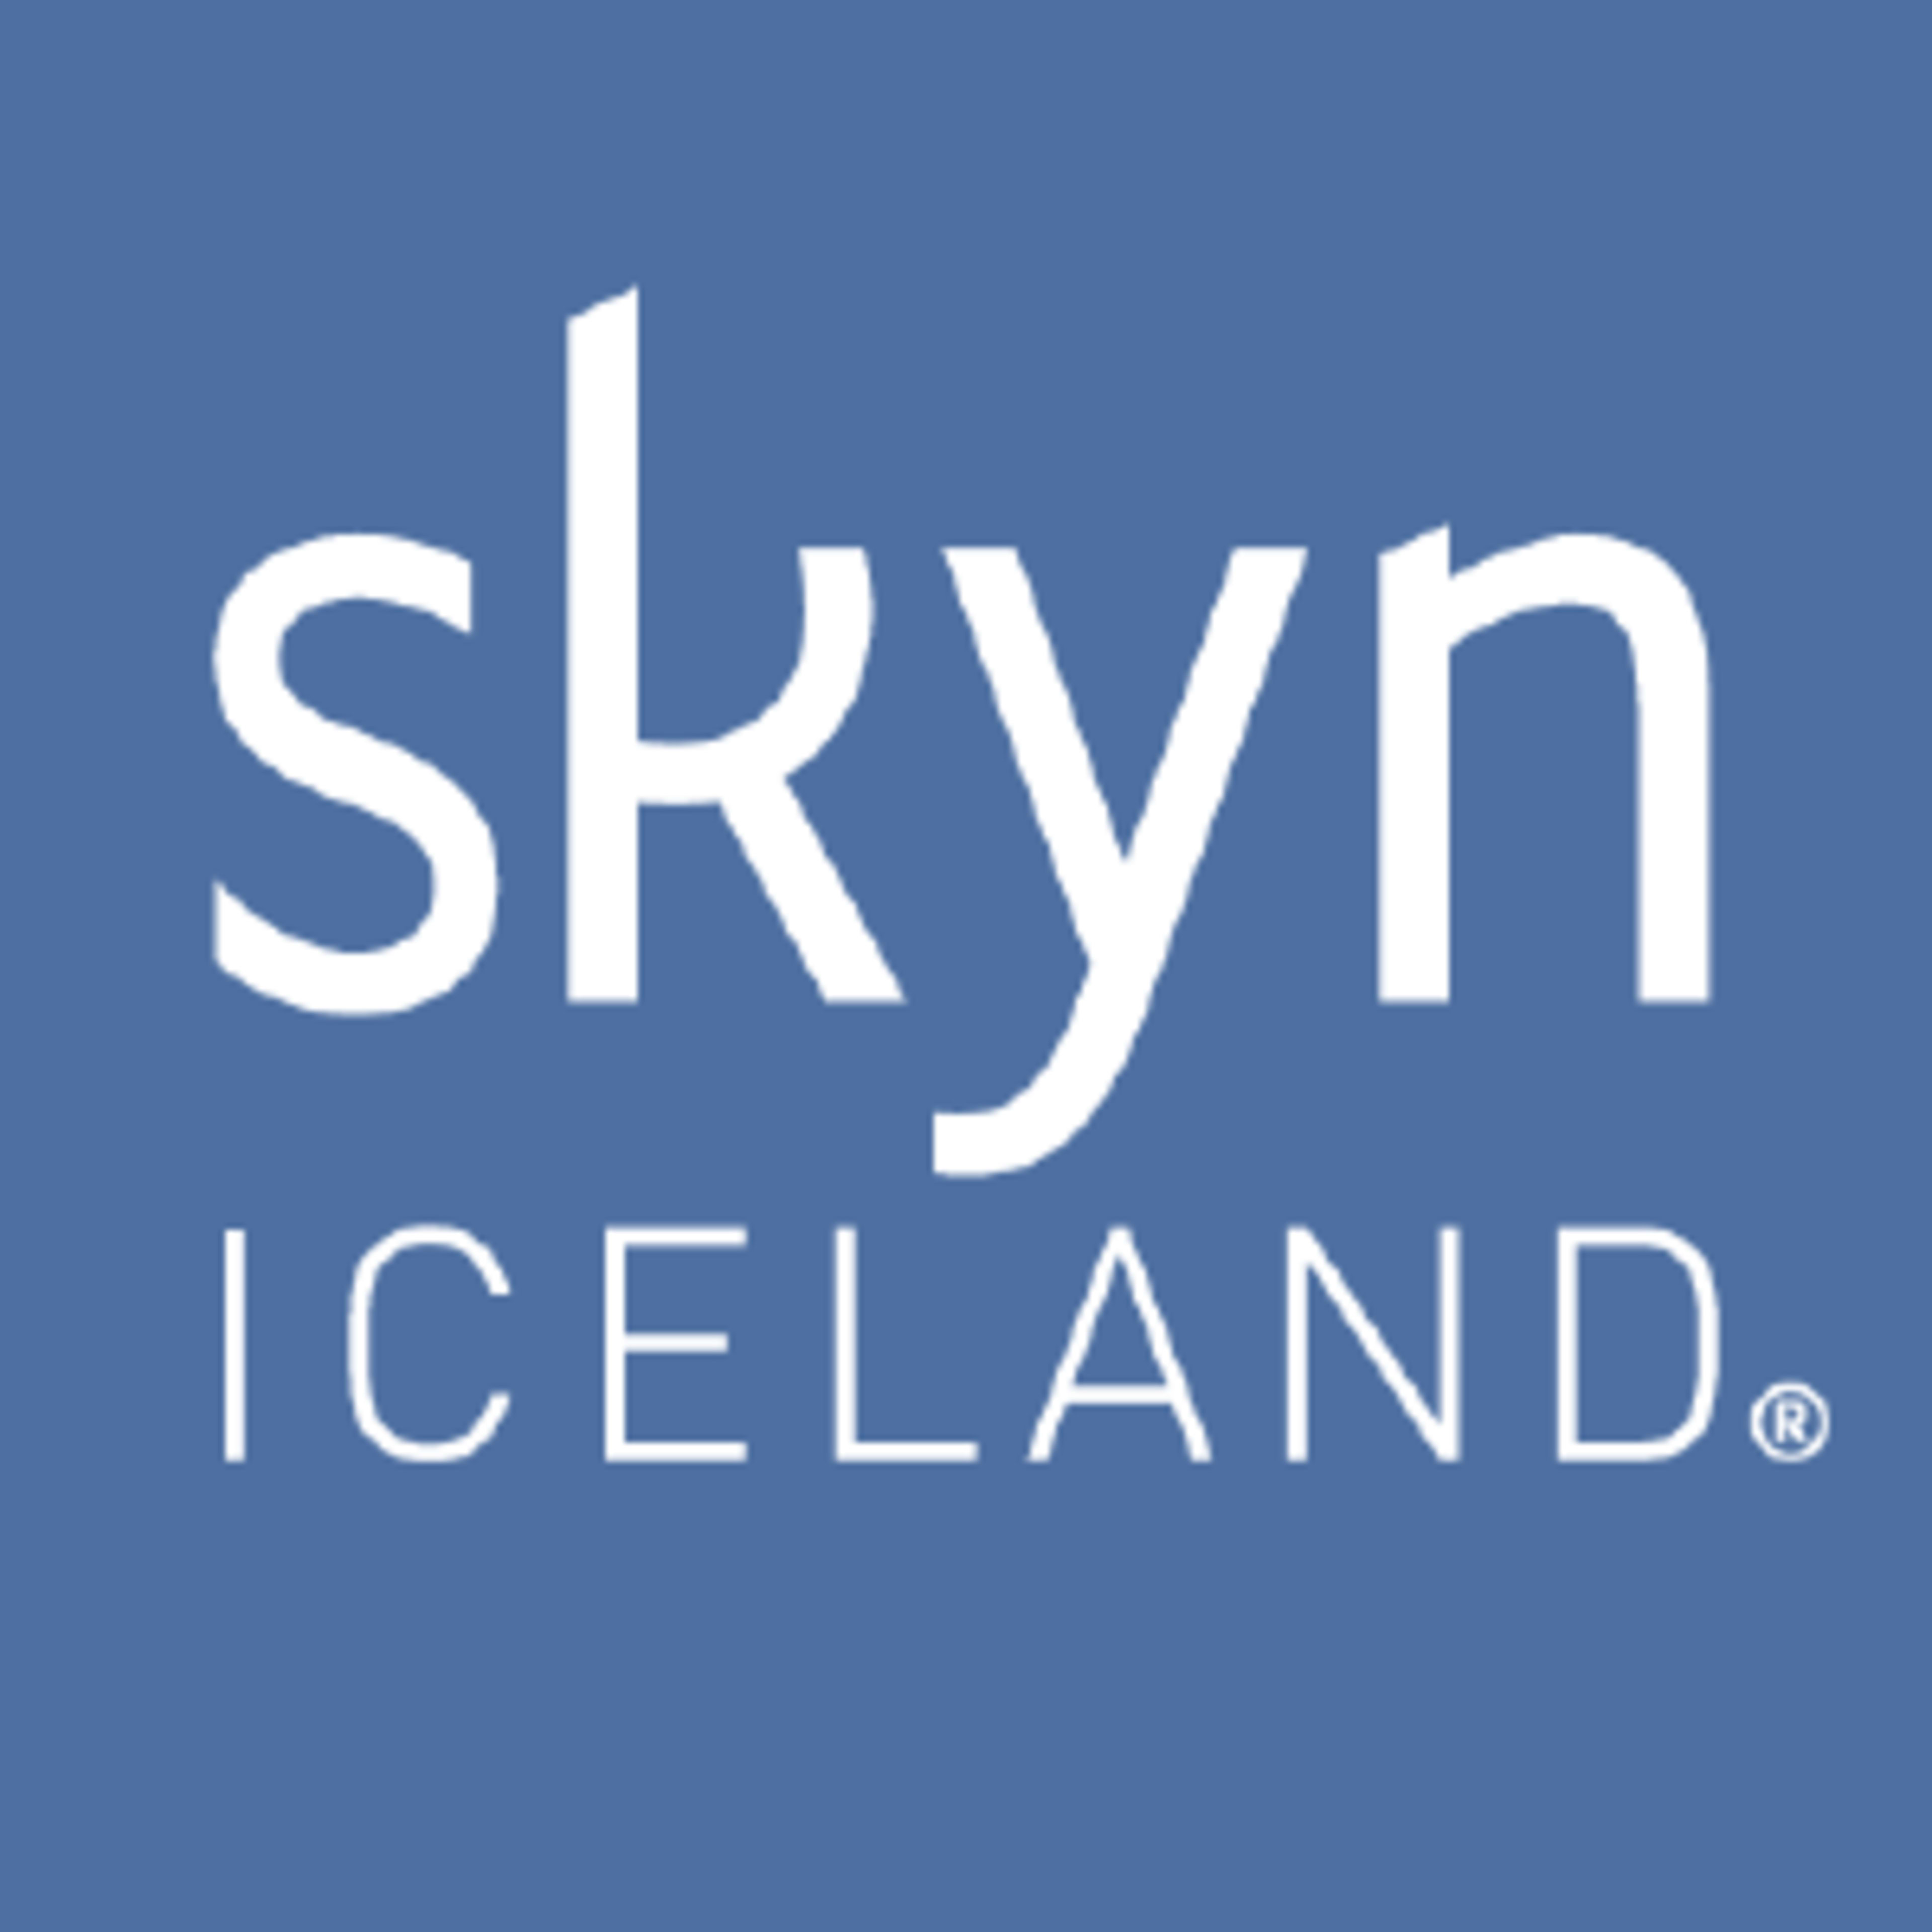 Skyn ICELAND Code